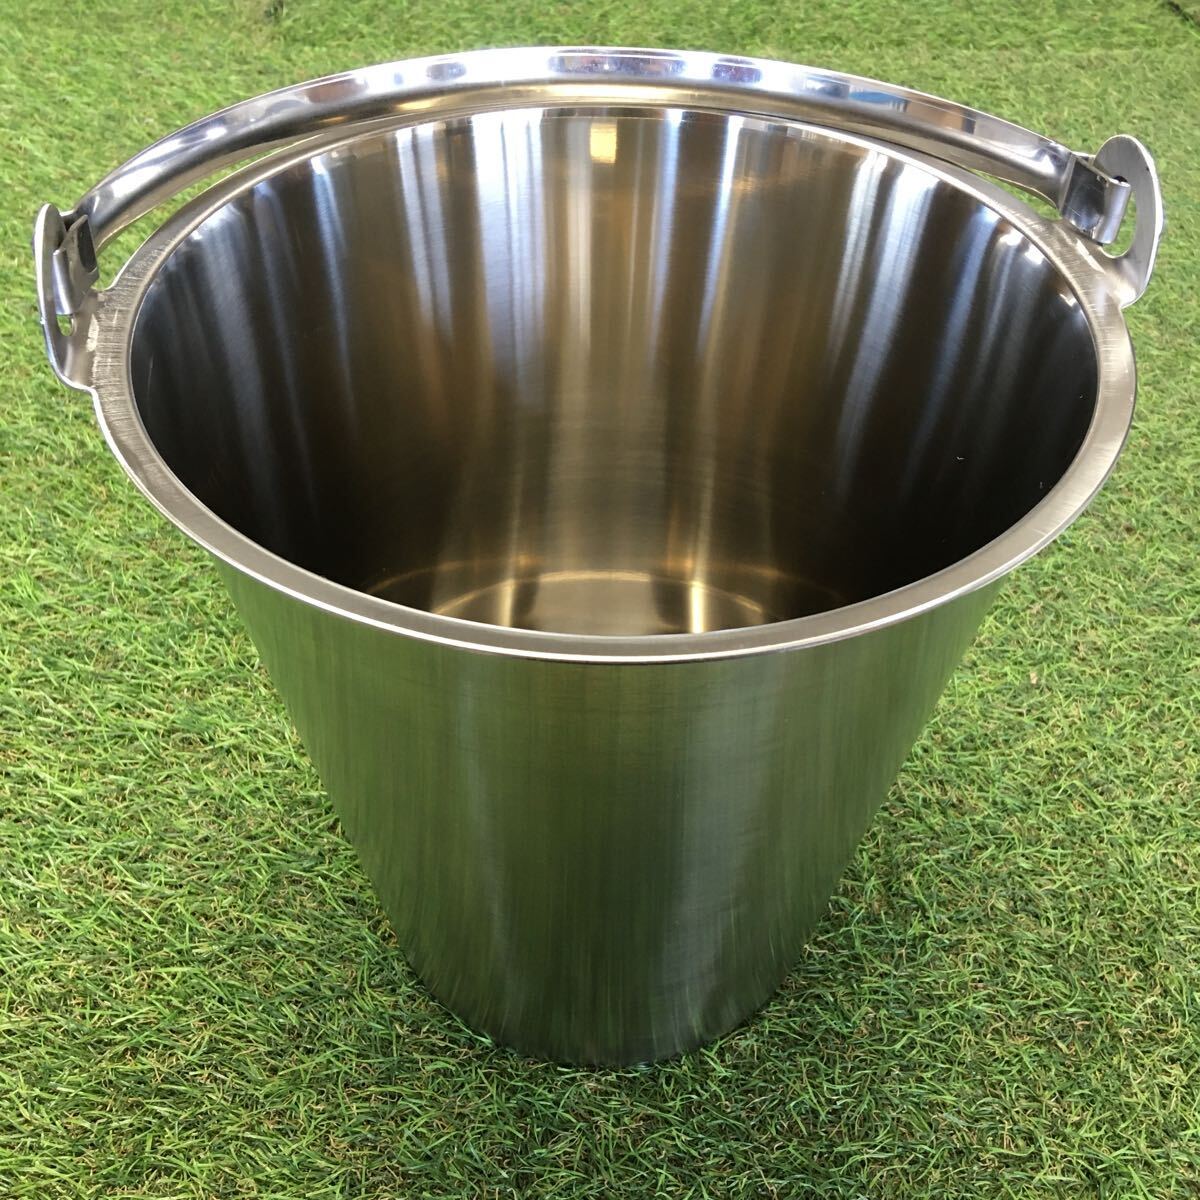 RX280 Linden Lynn tenyonas523007-03 plain bucket 7L stainless steel bucket cleaning supplies unused storage goods household articles 